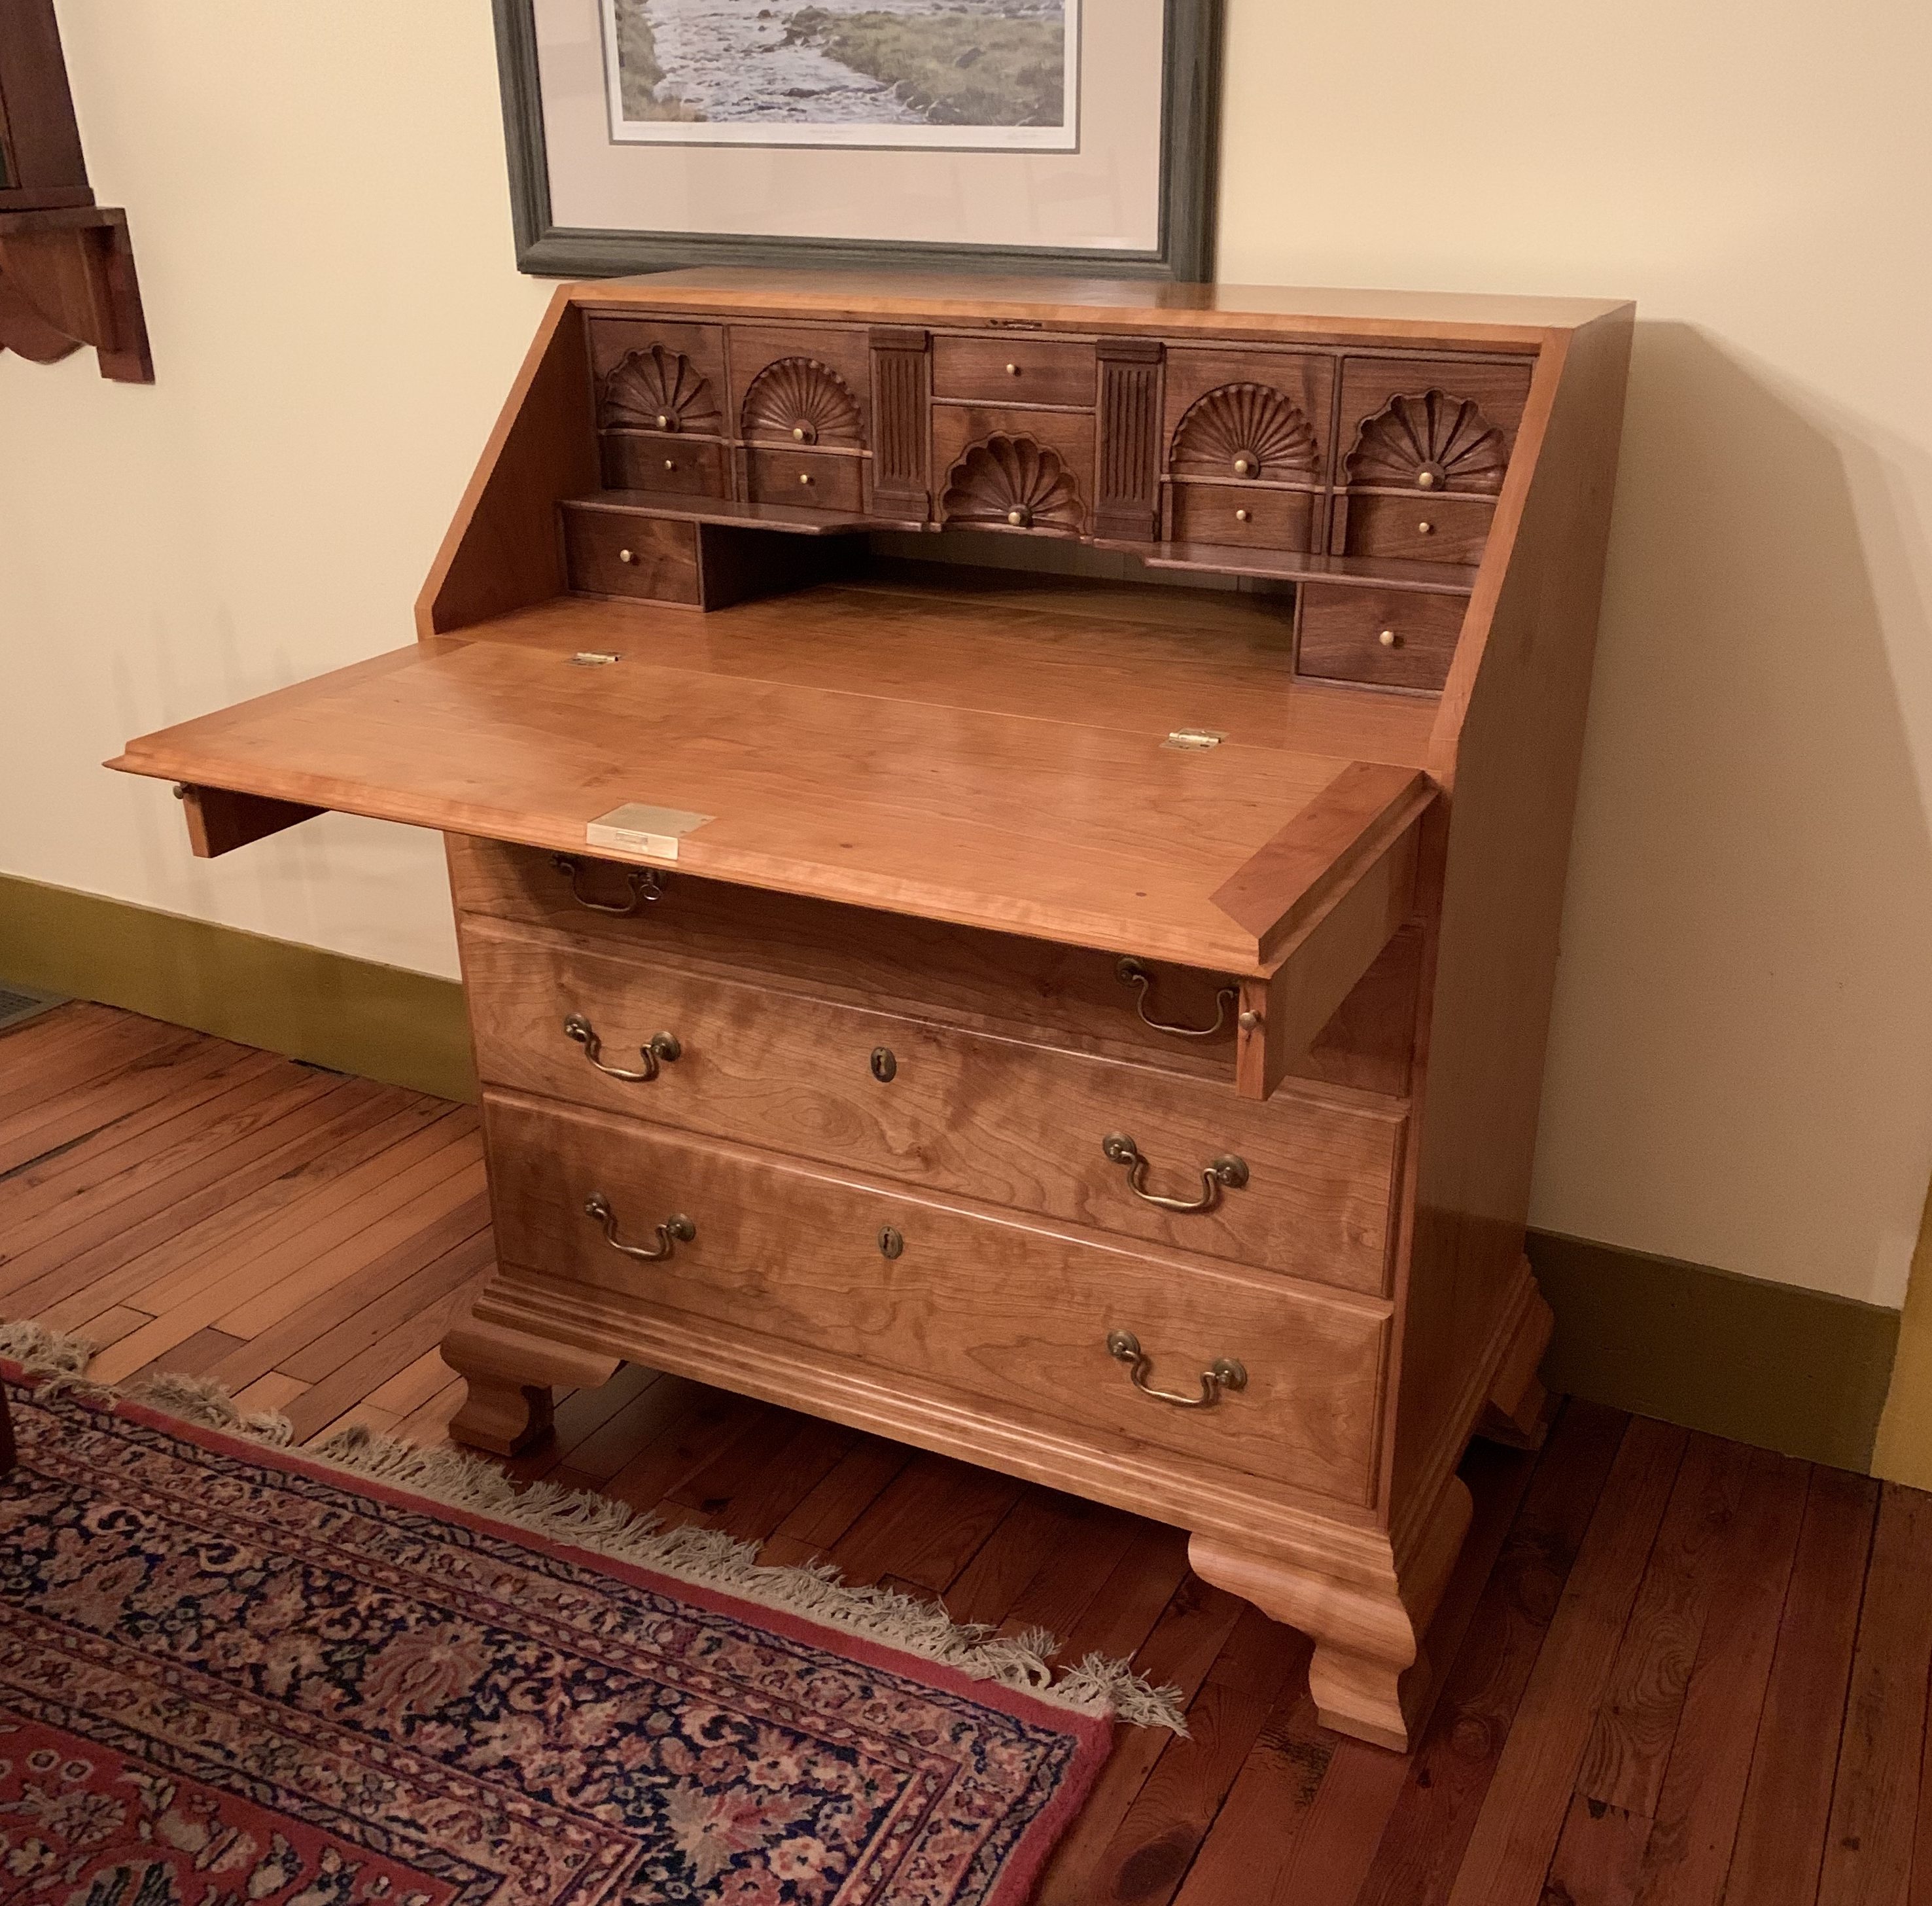 Secretary desk with hand carved interior draws